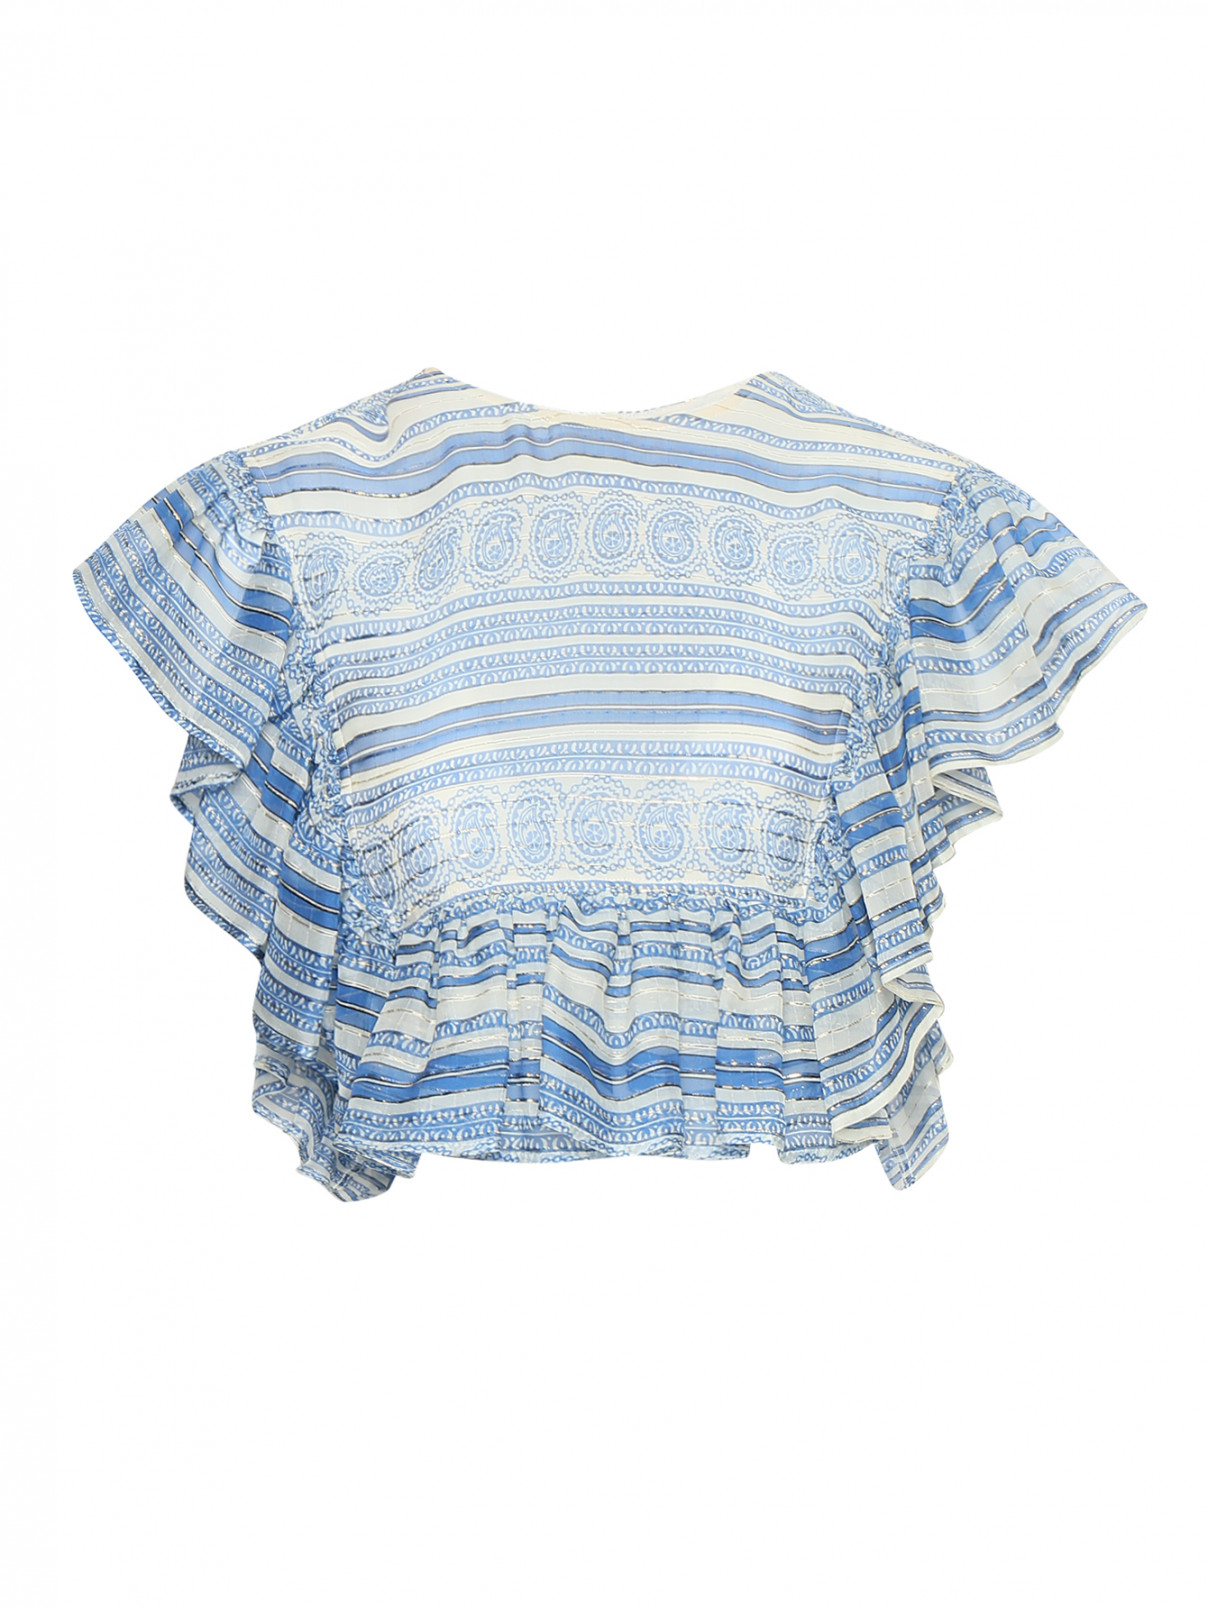 Блуза в полоску из шелка Philosophy di Lorenzo Serafini  –  Общий вид  – Цвет:  Синий